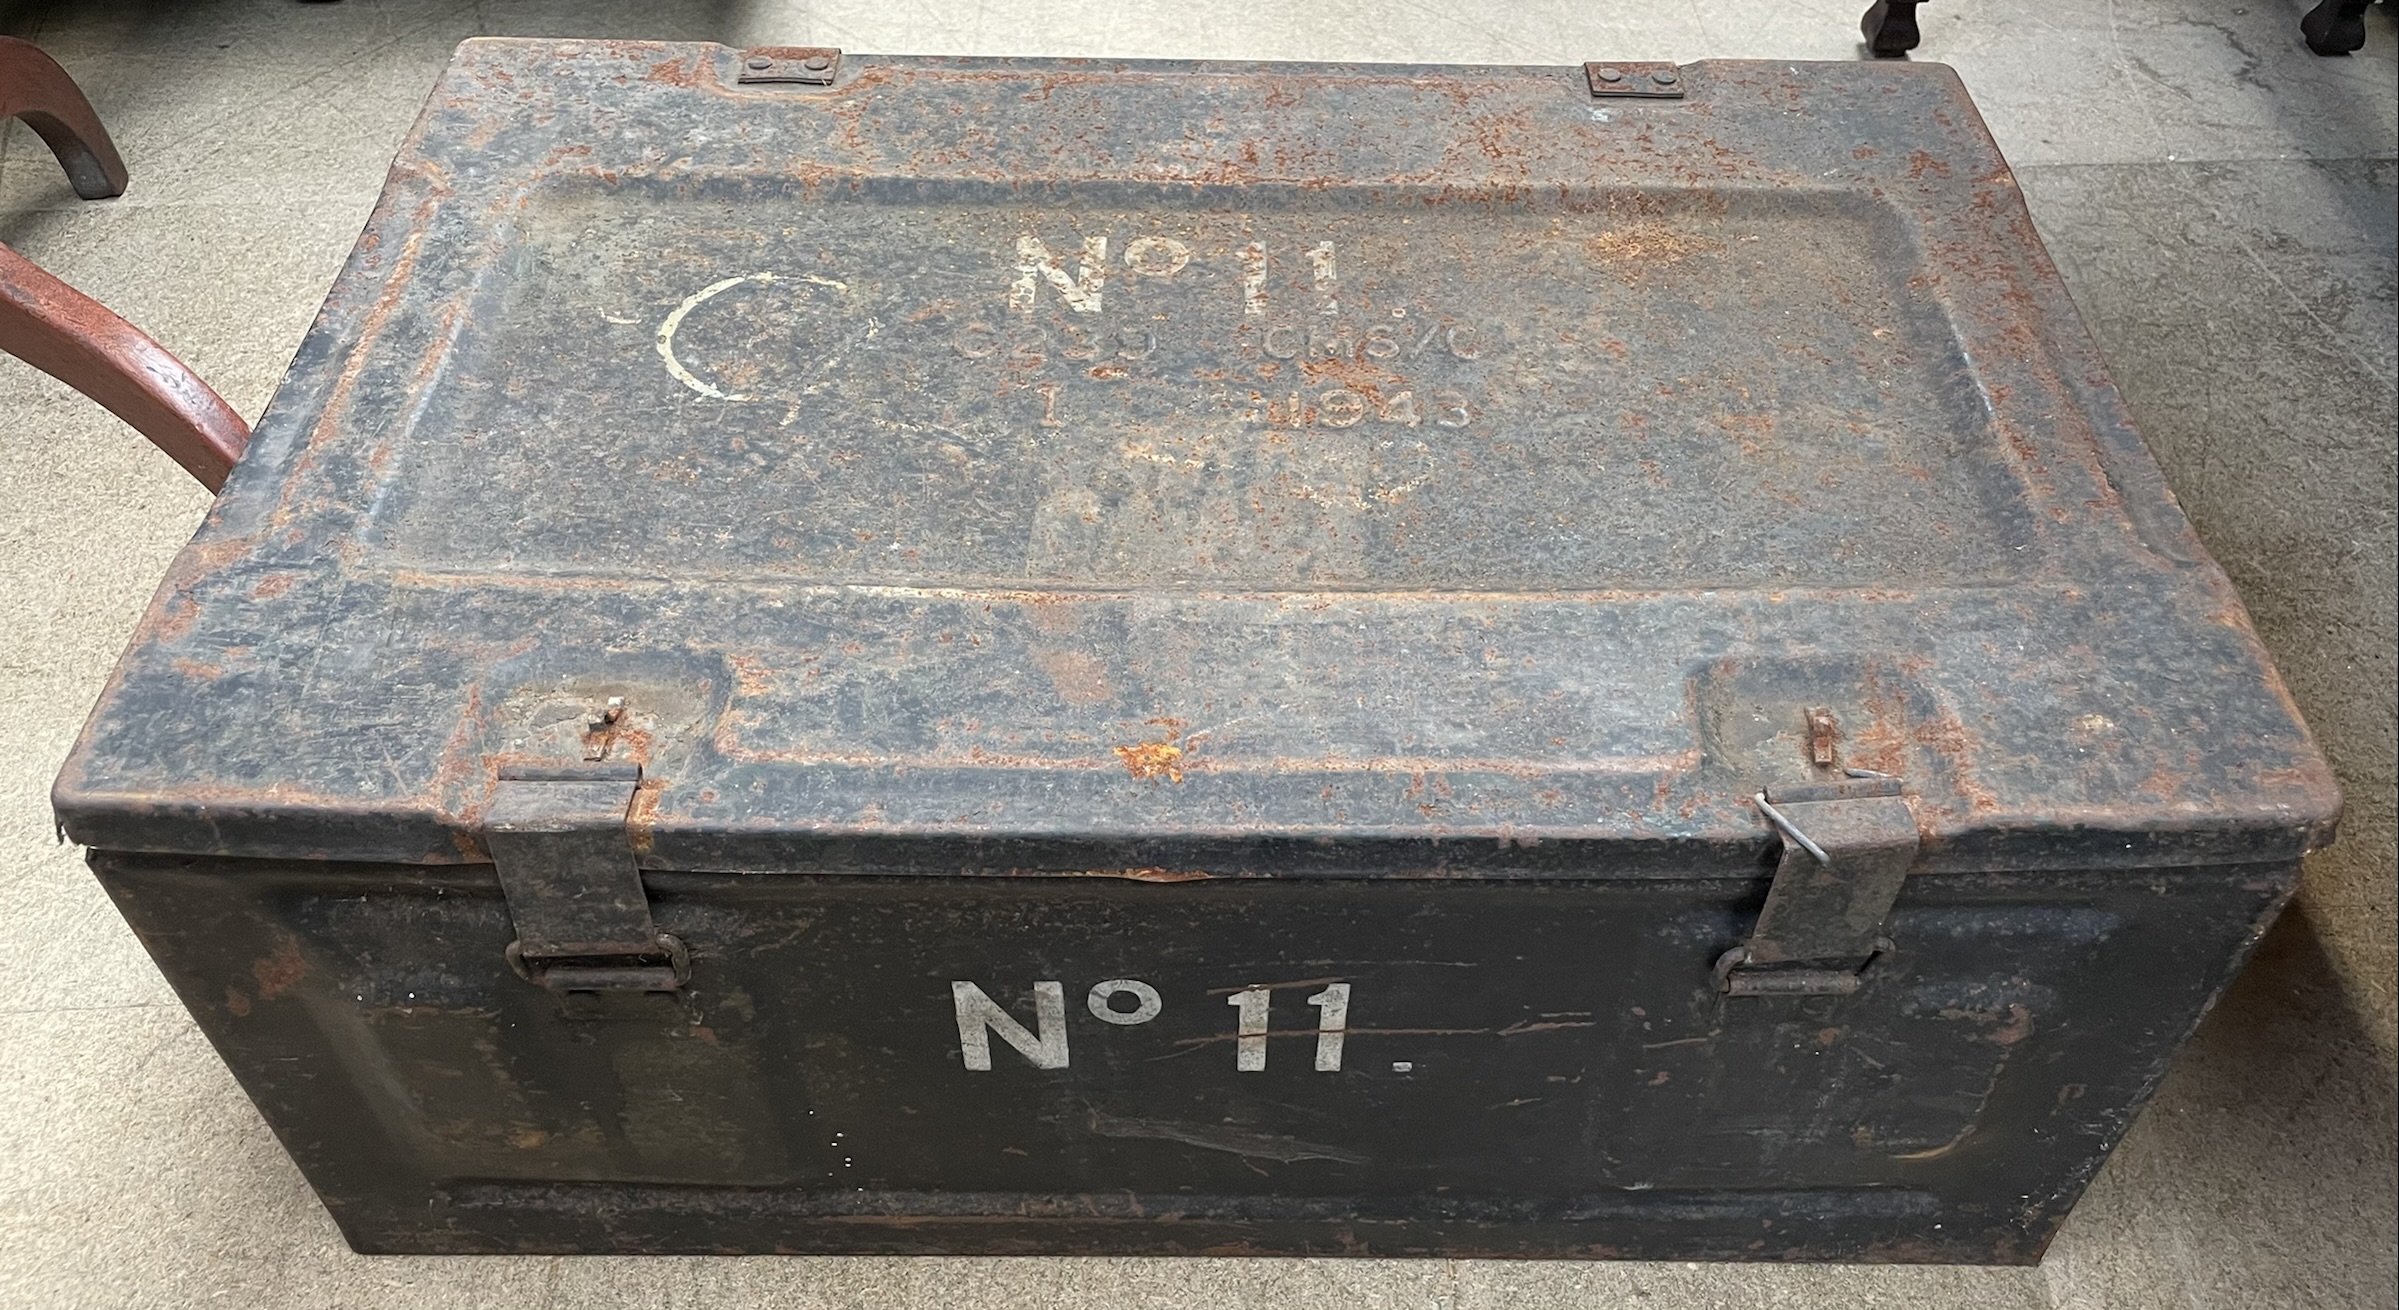 A World War II ammunition box,